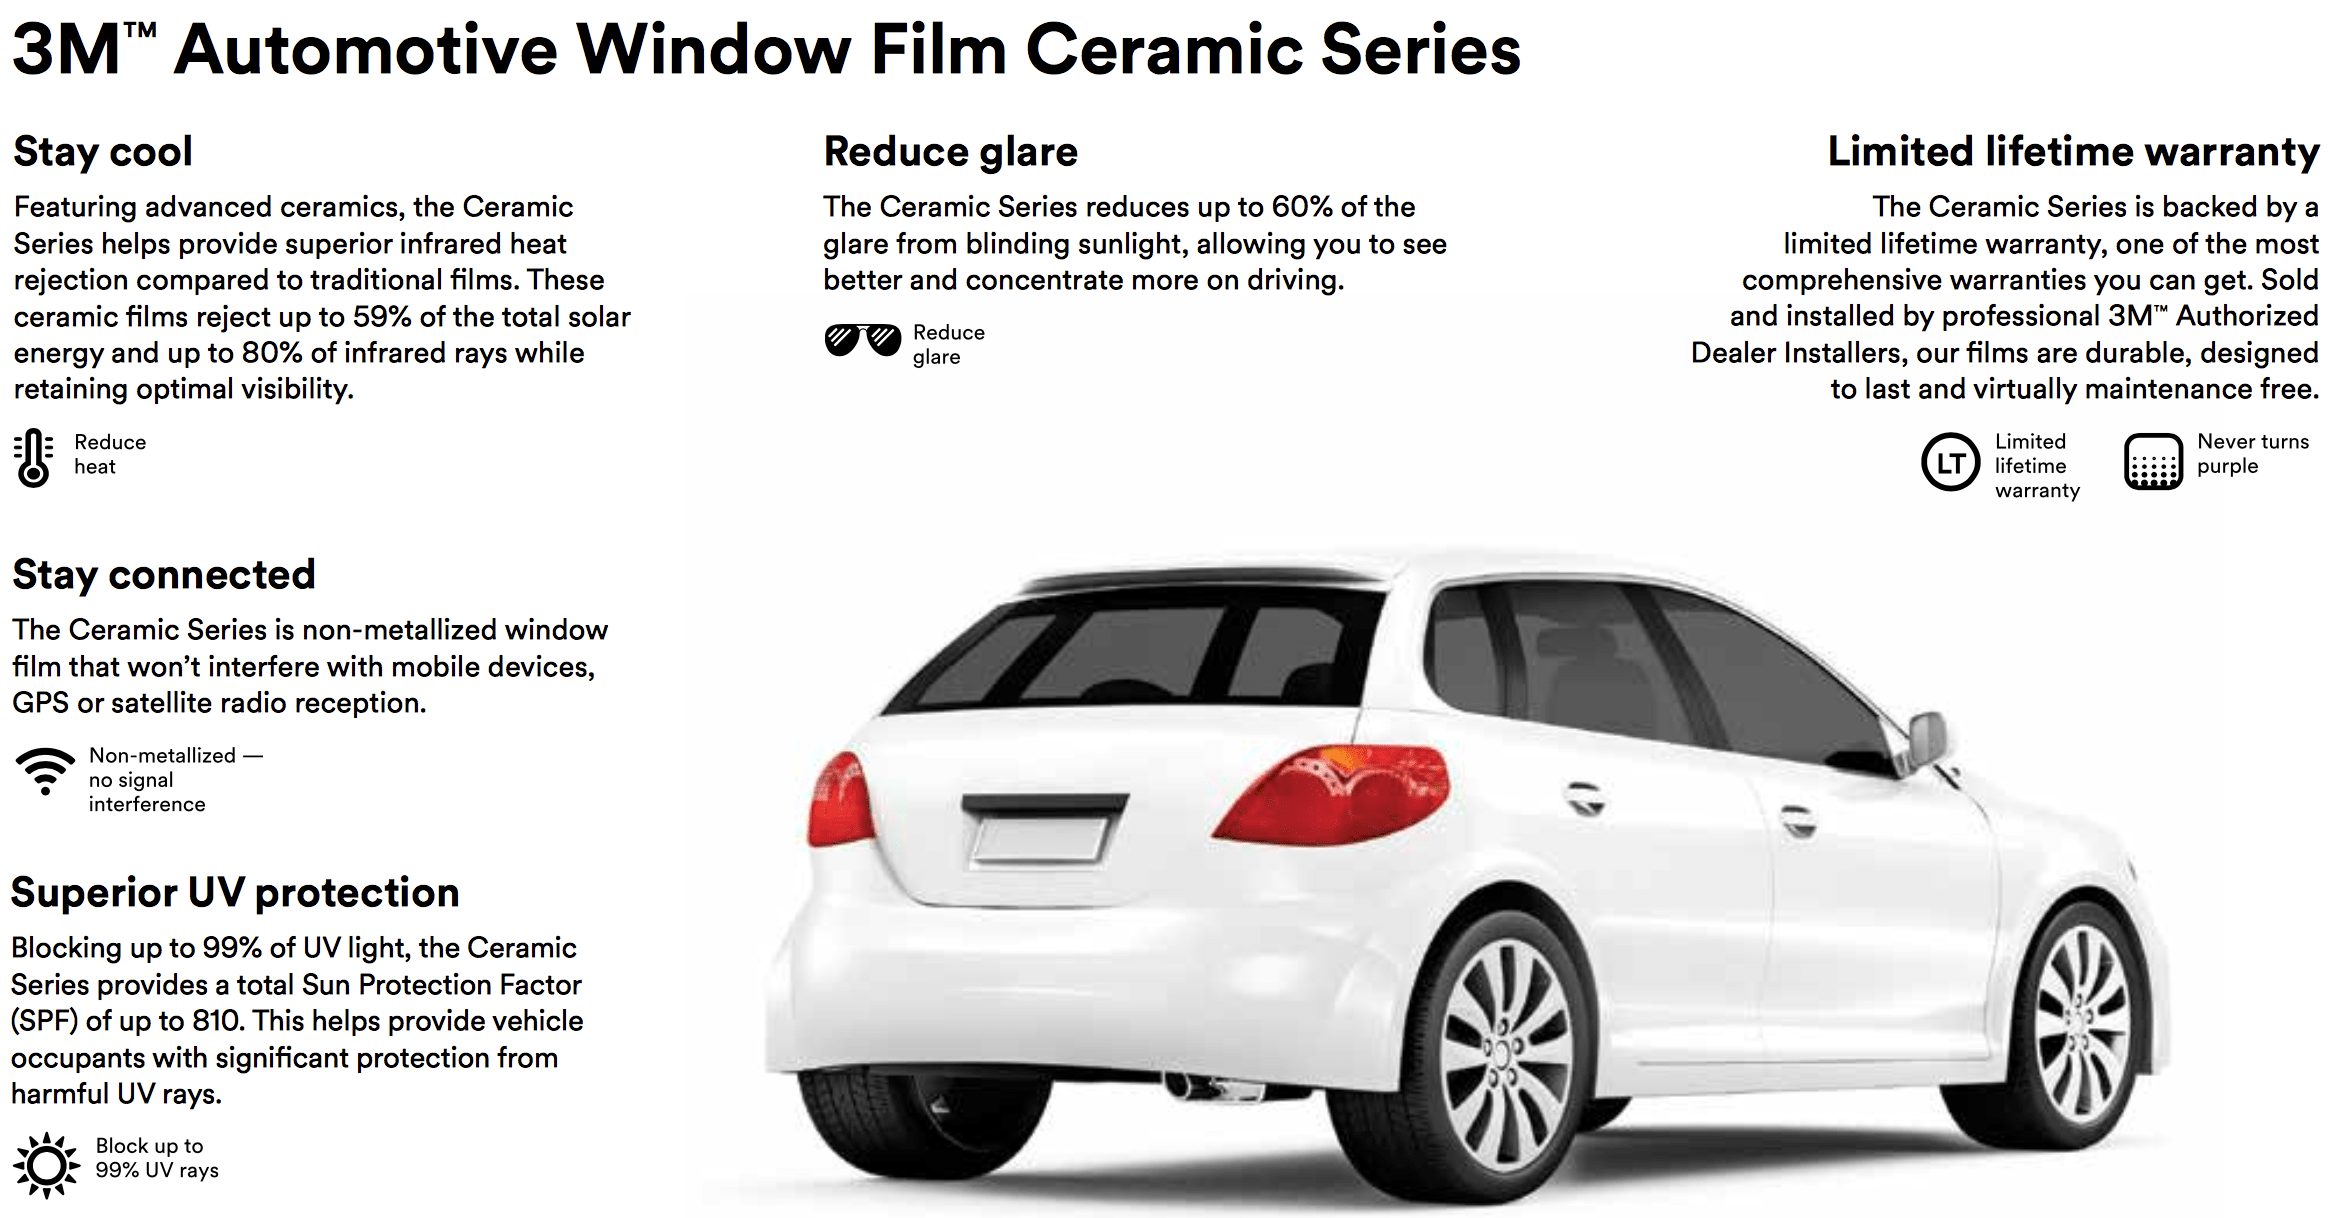 3M Automotive Window Film Ceramic Series Infographic